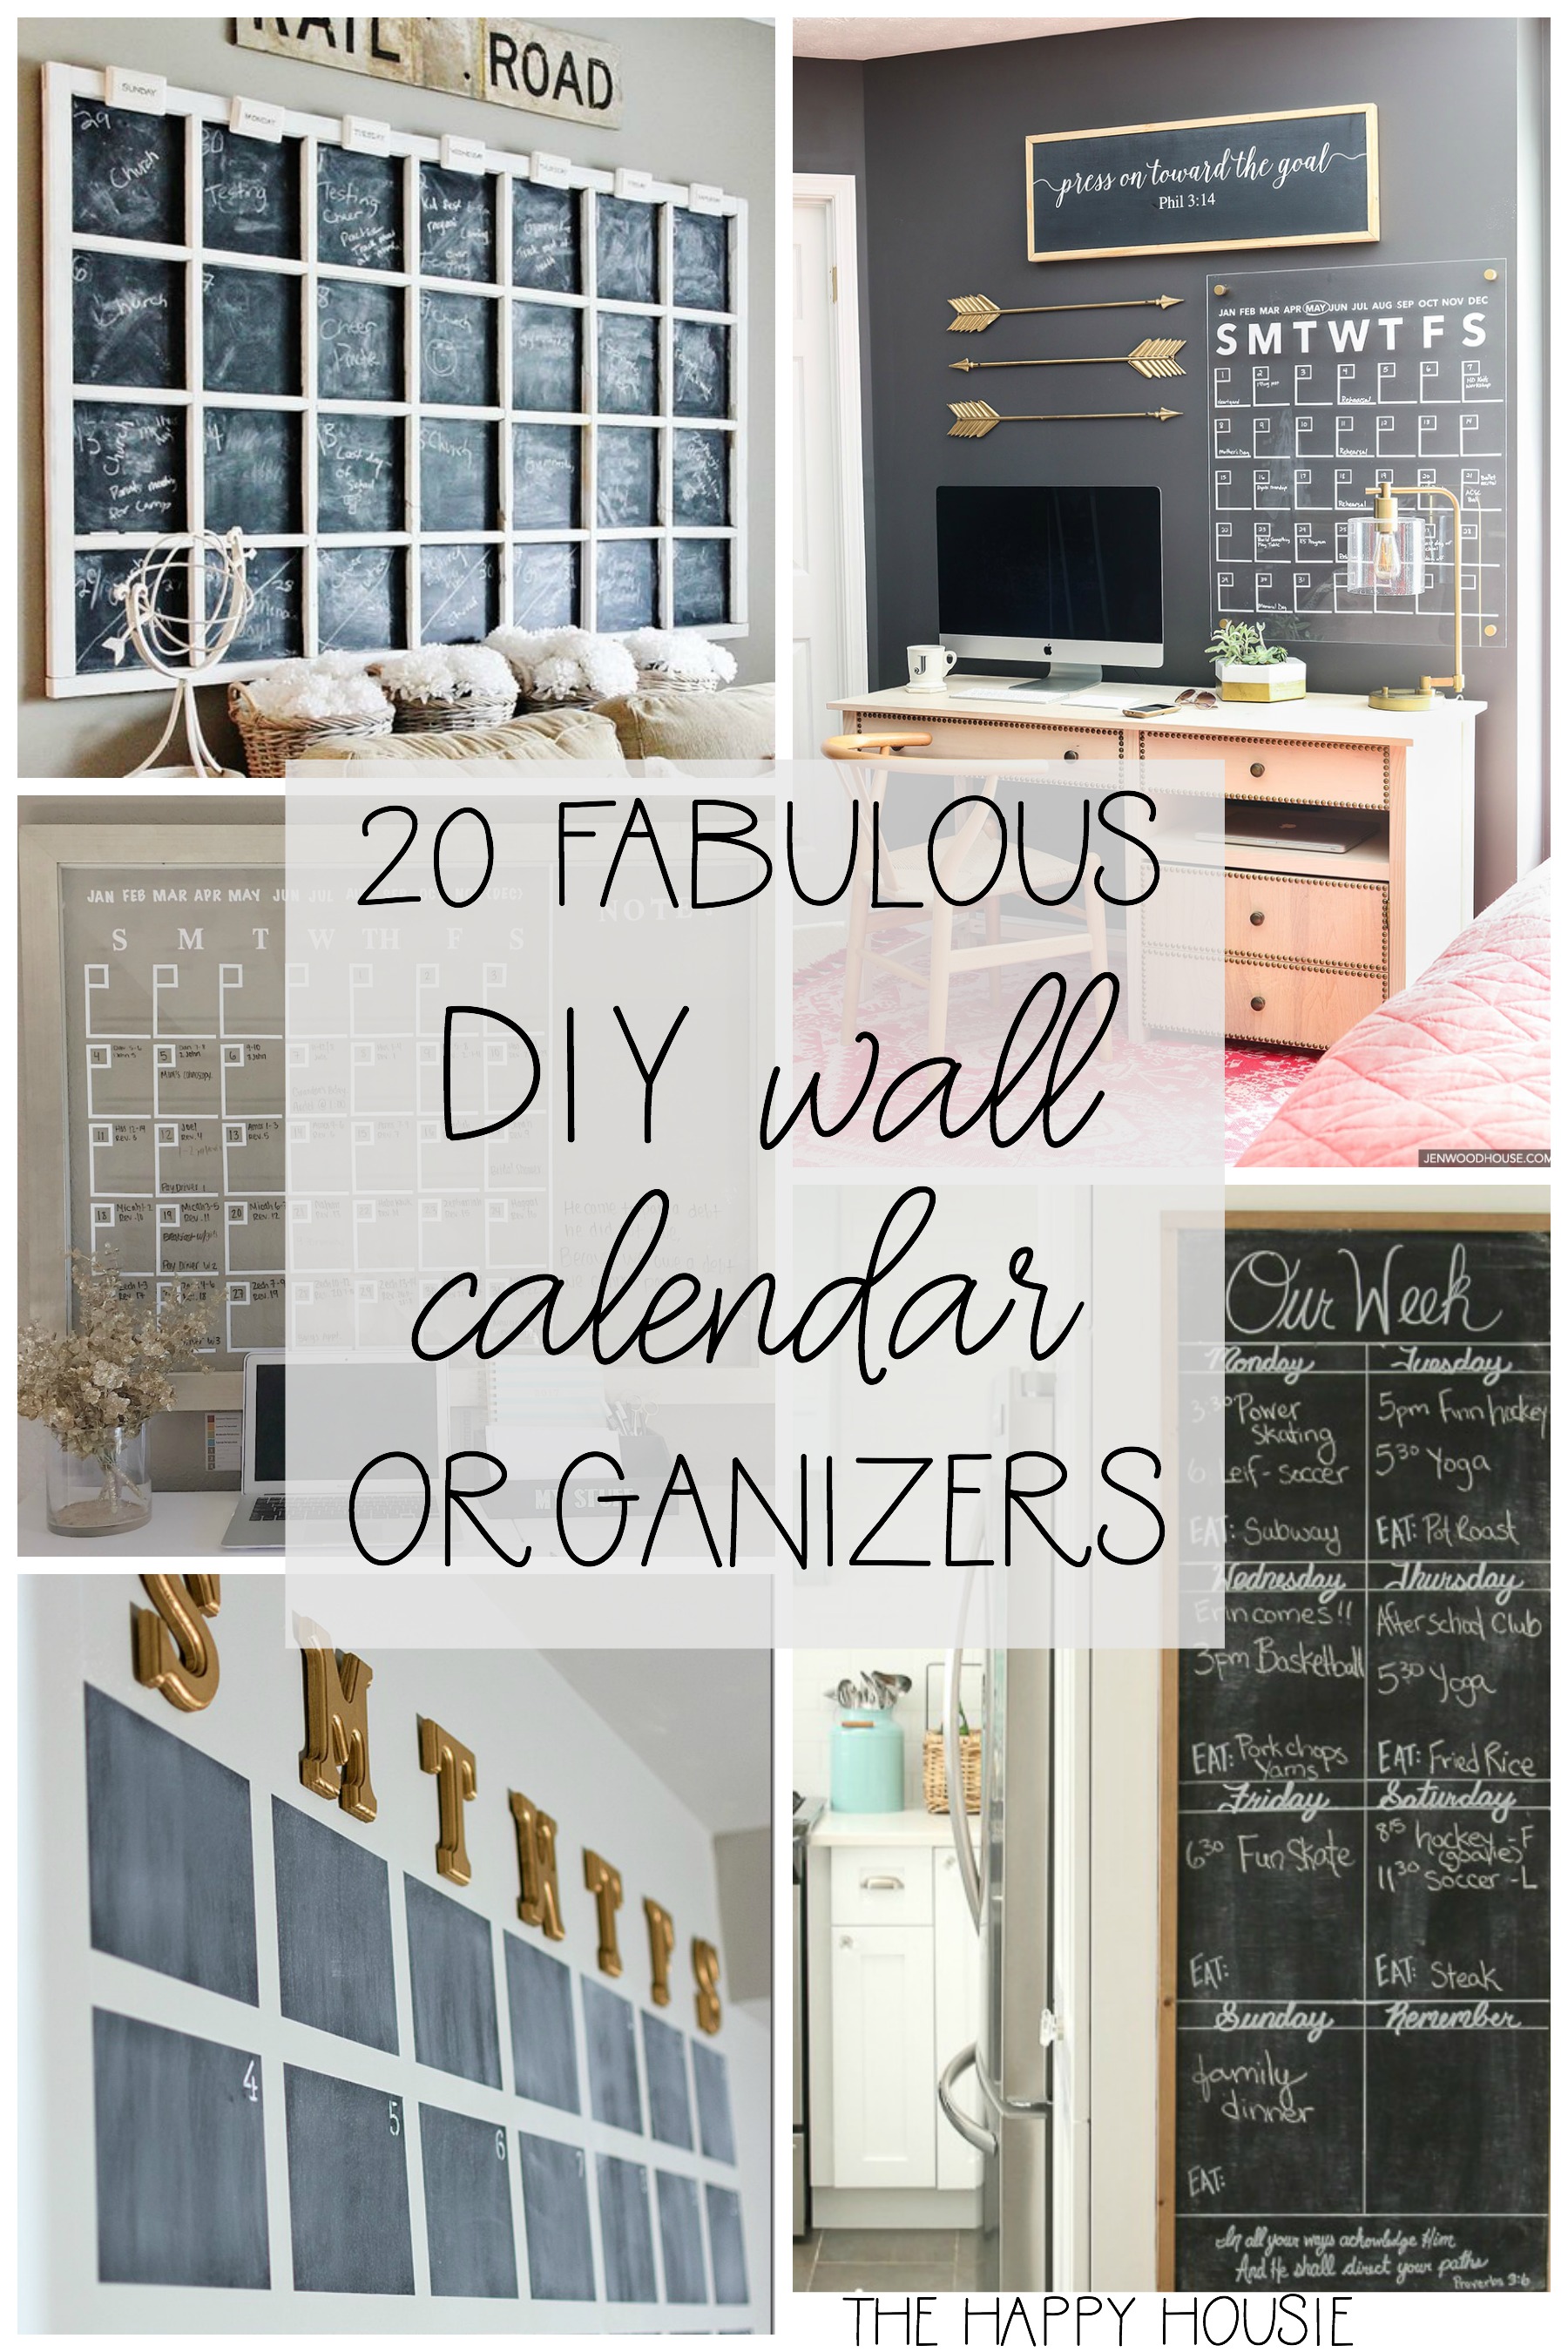 20 fabulous DIY wall calendar organizers poster